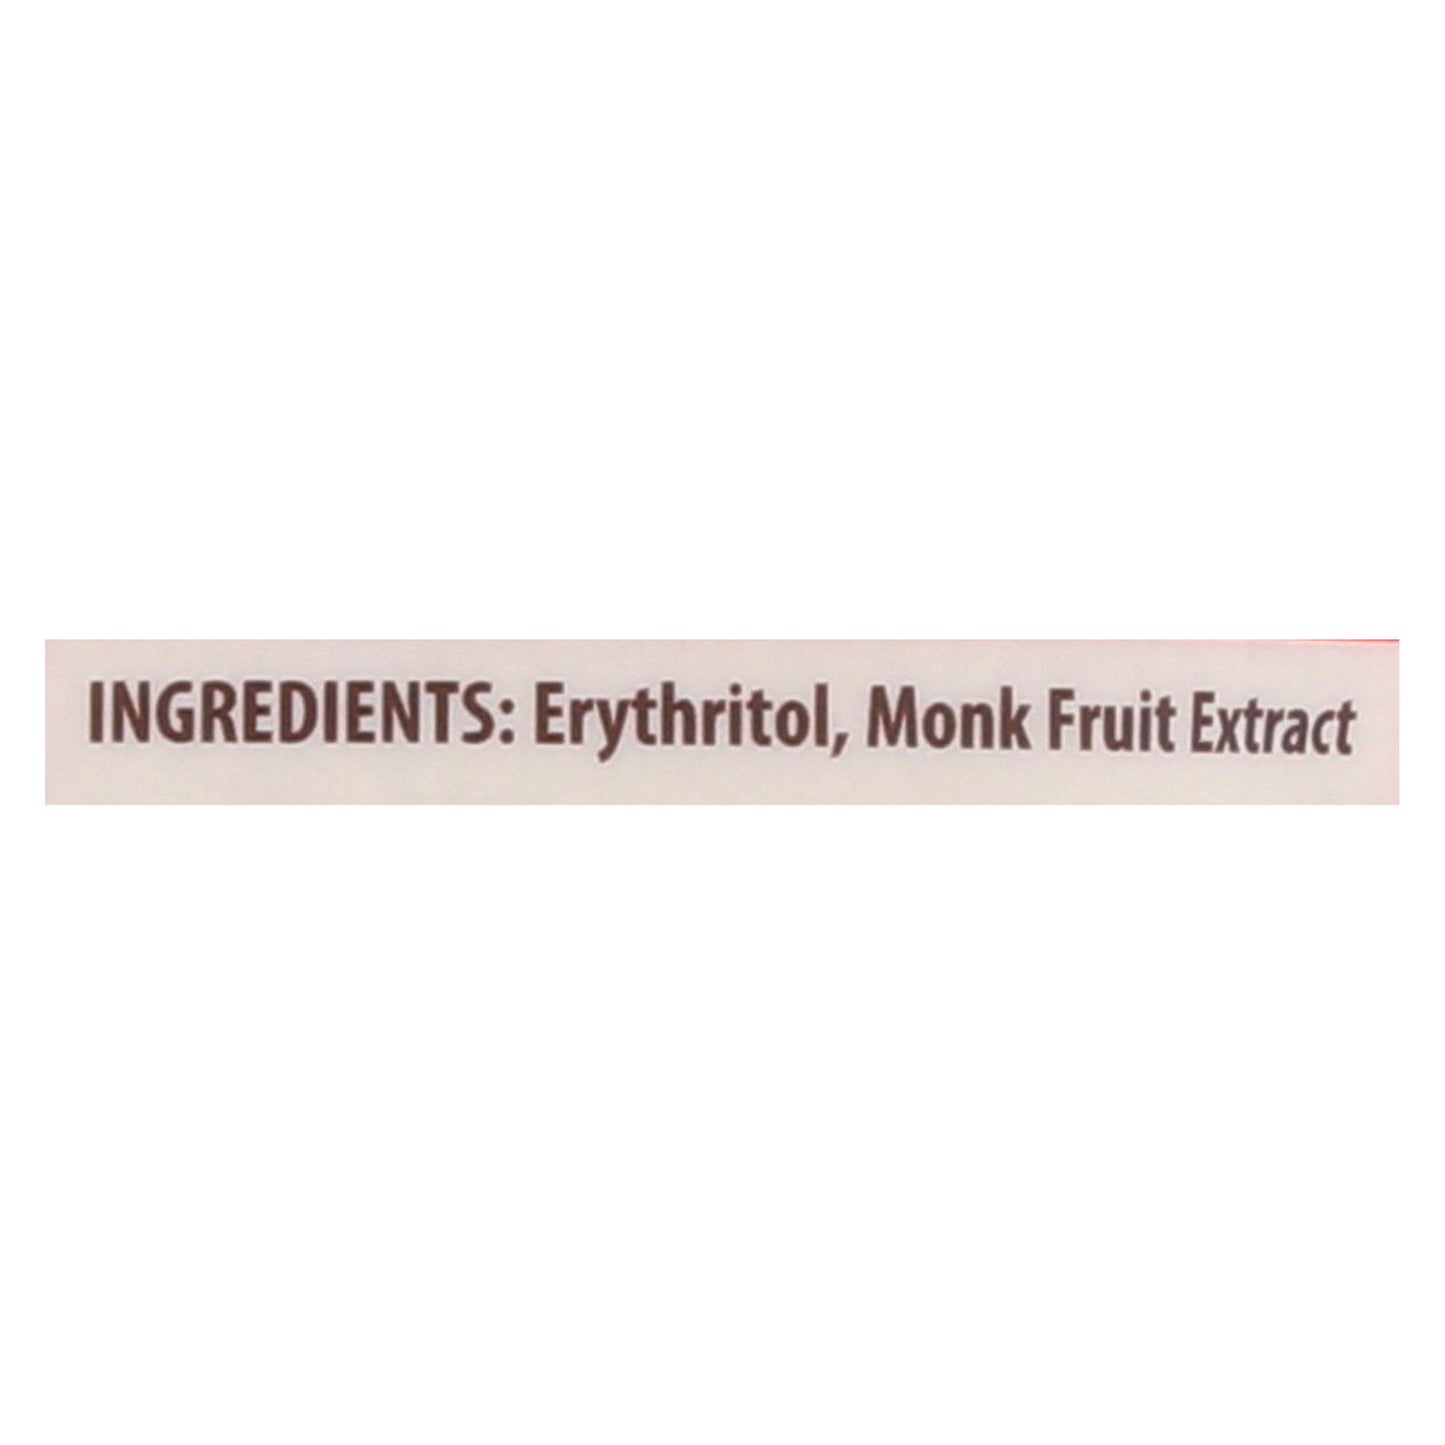 Lakanto® Lakanto Monkfruit Sweetener With Erythritol - Case Of 8 - 28.22 Oz